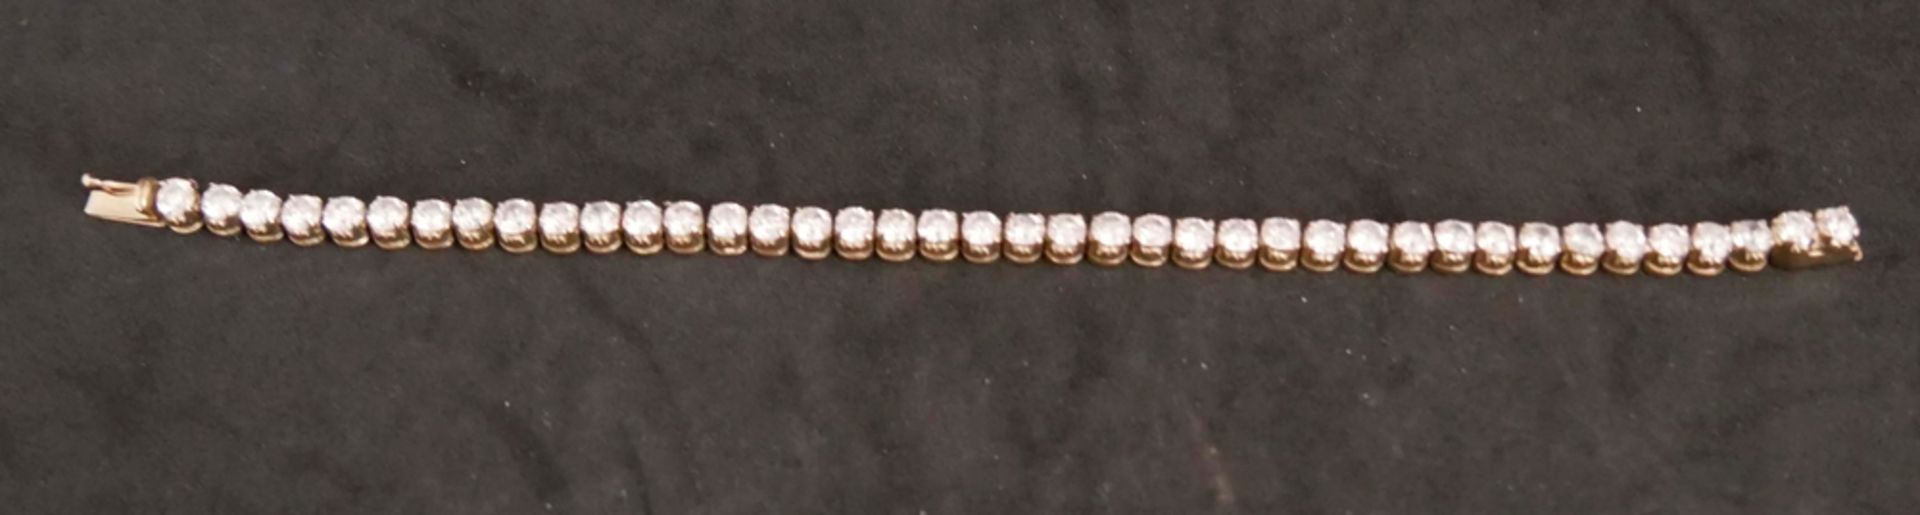 925er Silber Armband, vergoldet mit Zirkonia. Länge ca. 19 cm